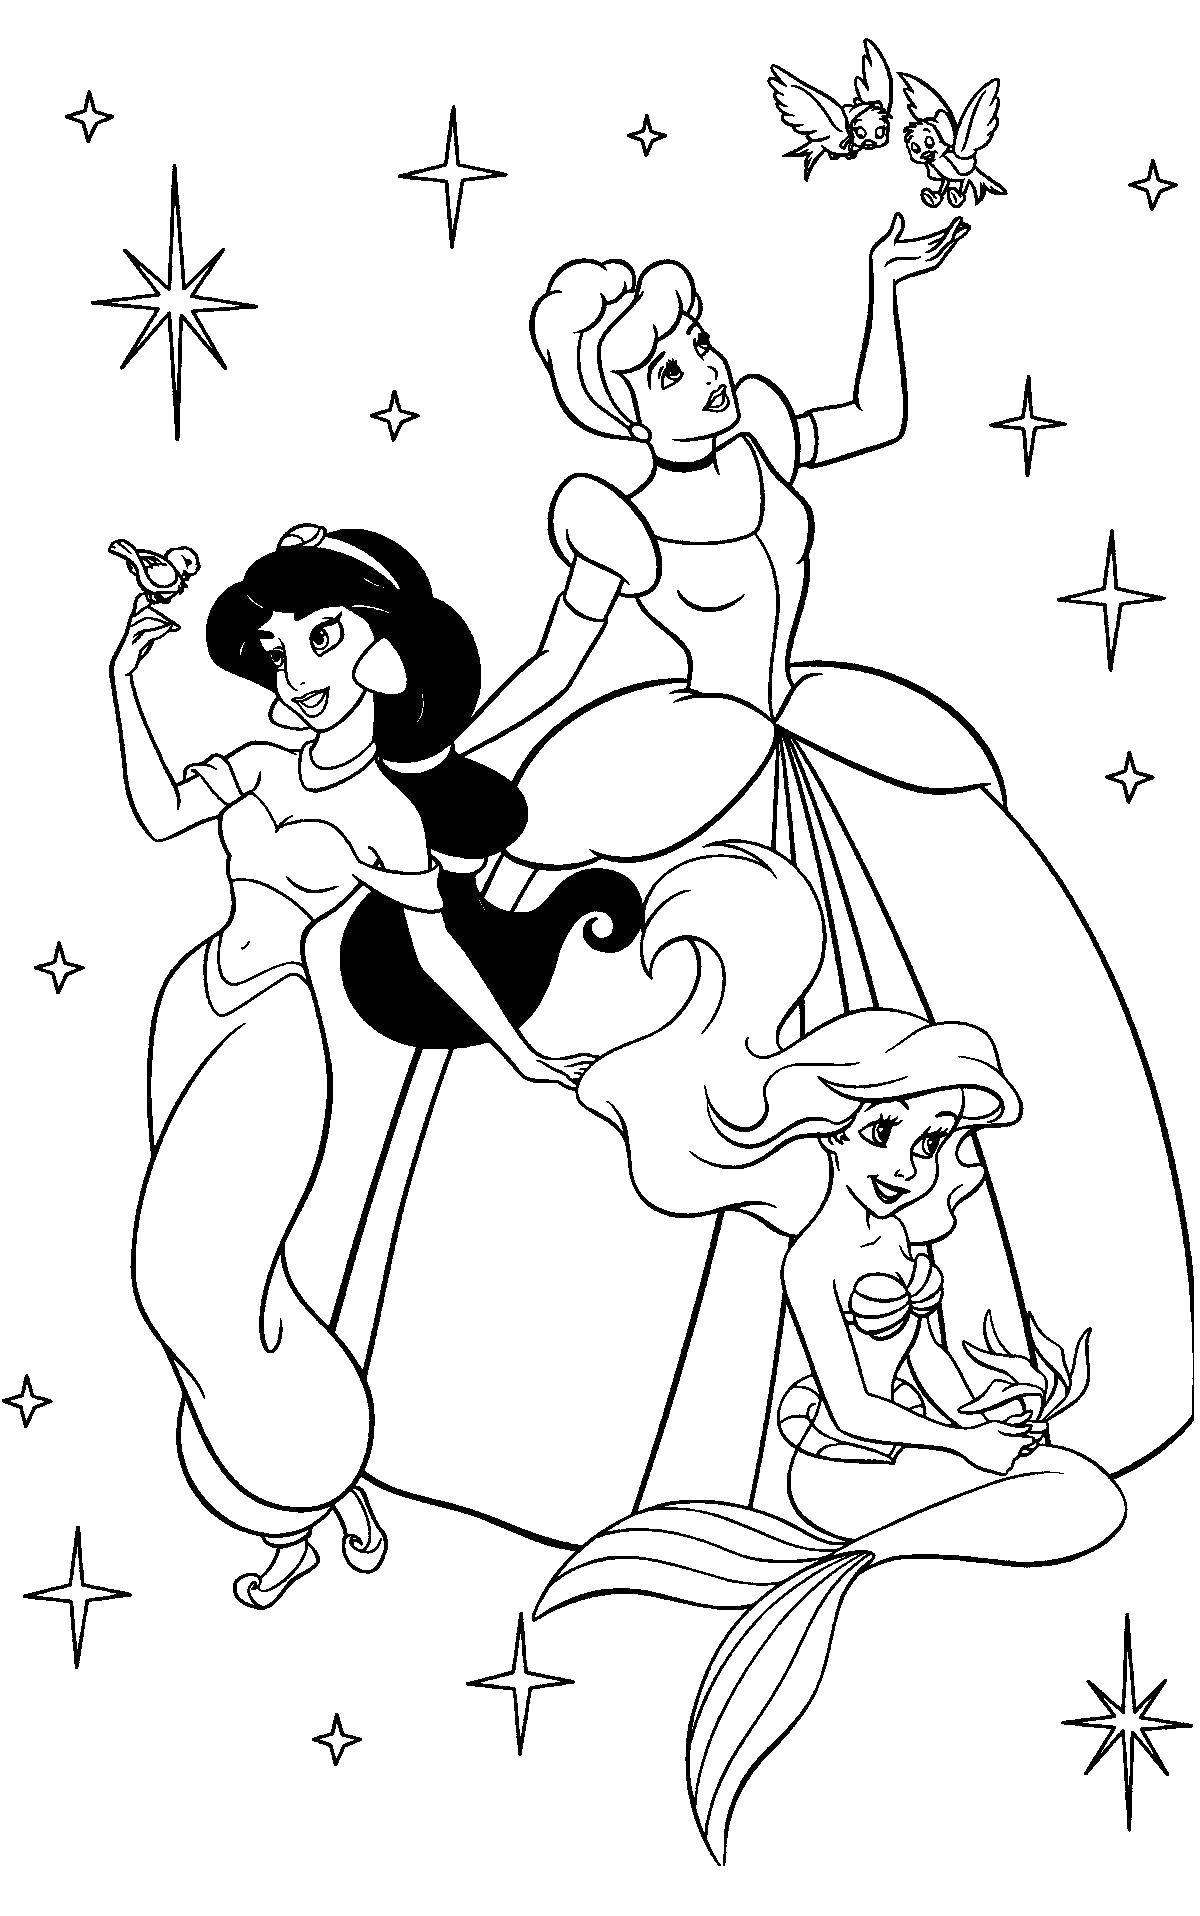 Coloring Ariel, Jasmine and Cinderella. Category Disney coloring pages. Tags:  Disney, Cinderella, Ariel, Jasmine.